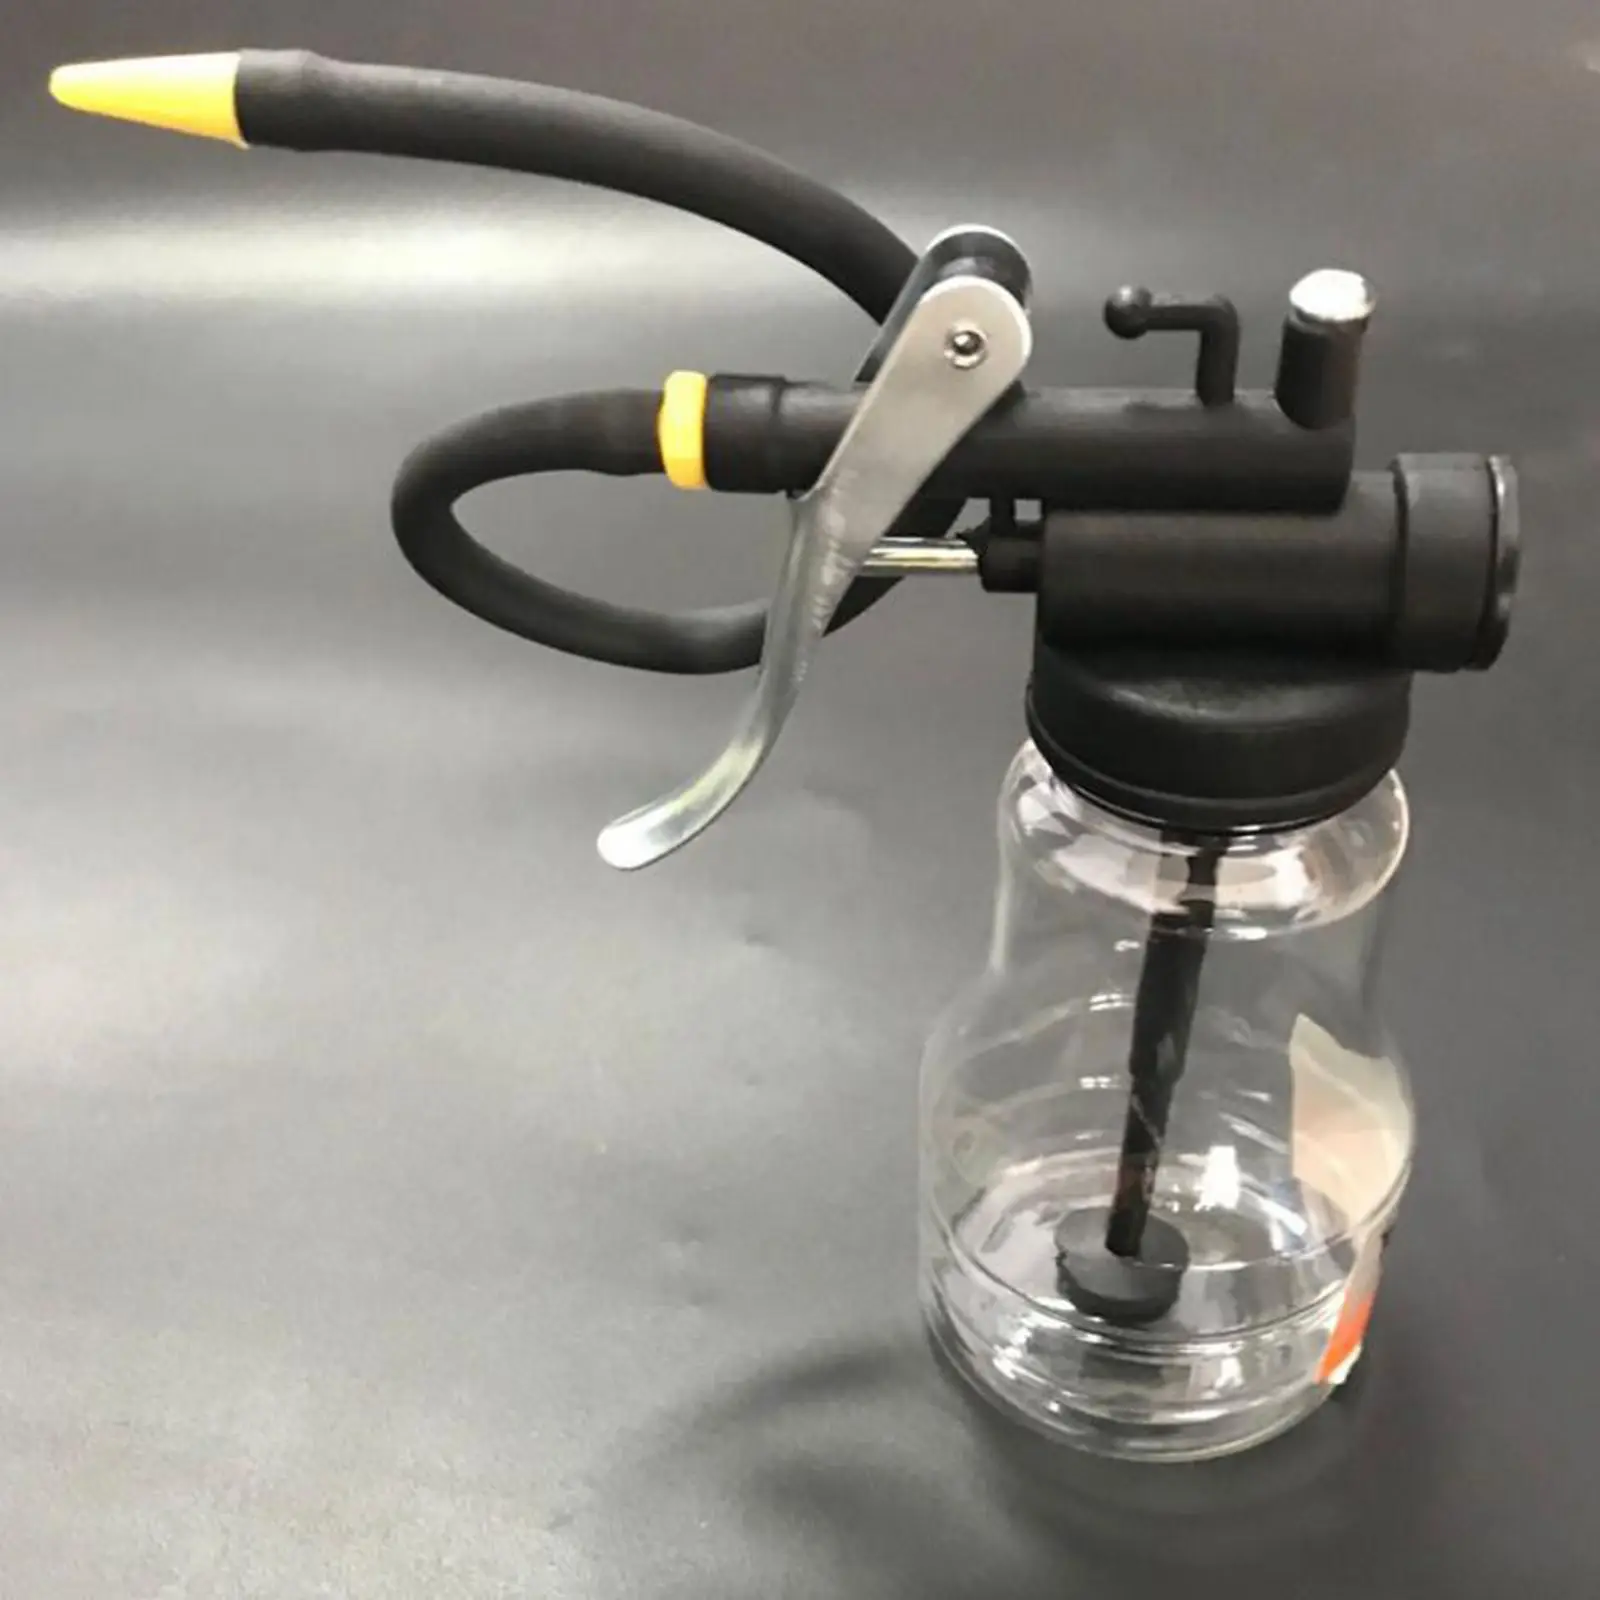 Oil Can Plastic Pump Mini Hose Oil Injector Can Grease Gun Anti-drop Wear-resistant Impact-resistant